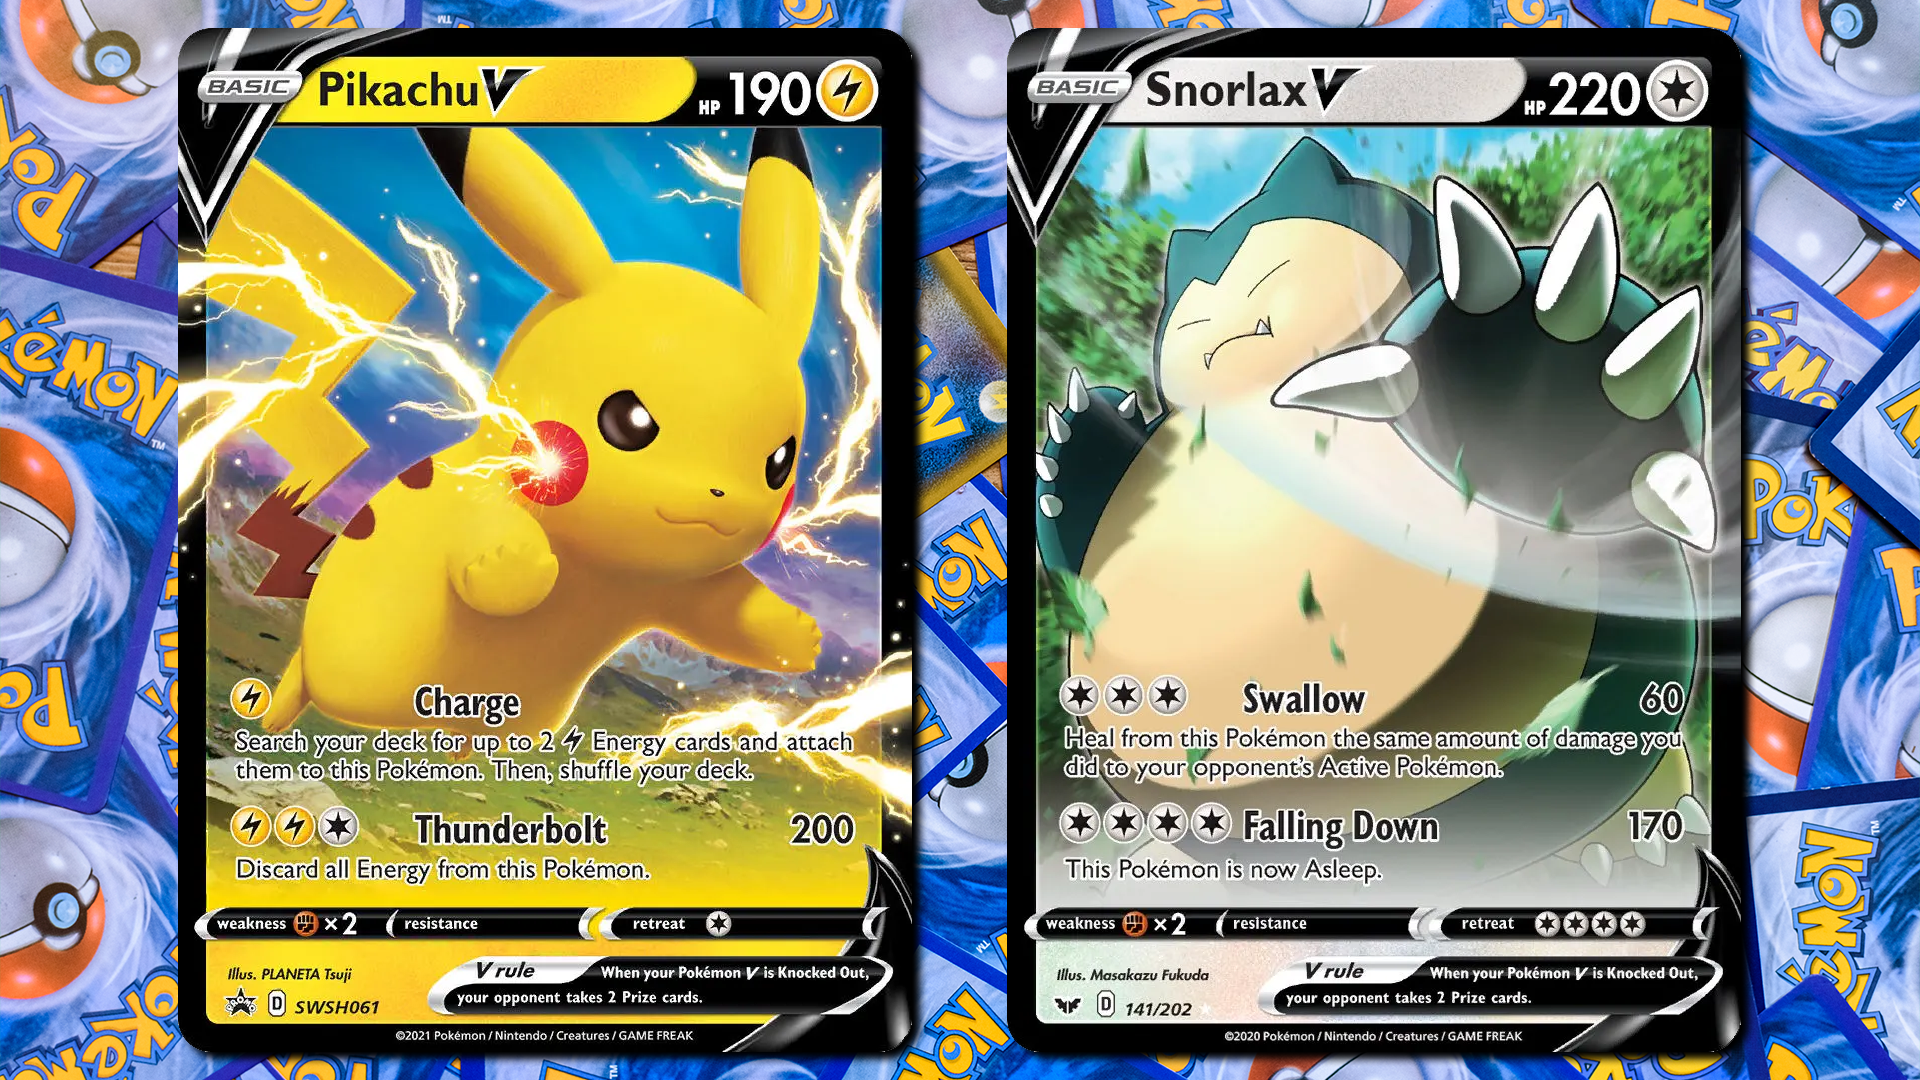 Jumbo Pikachu V and Snorlax V Pokémon cards on top of facedown Pokémon cards